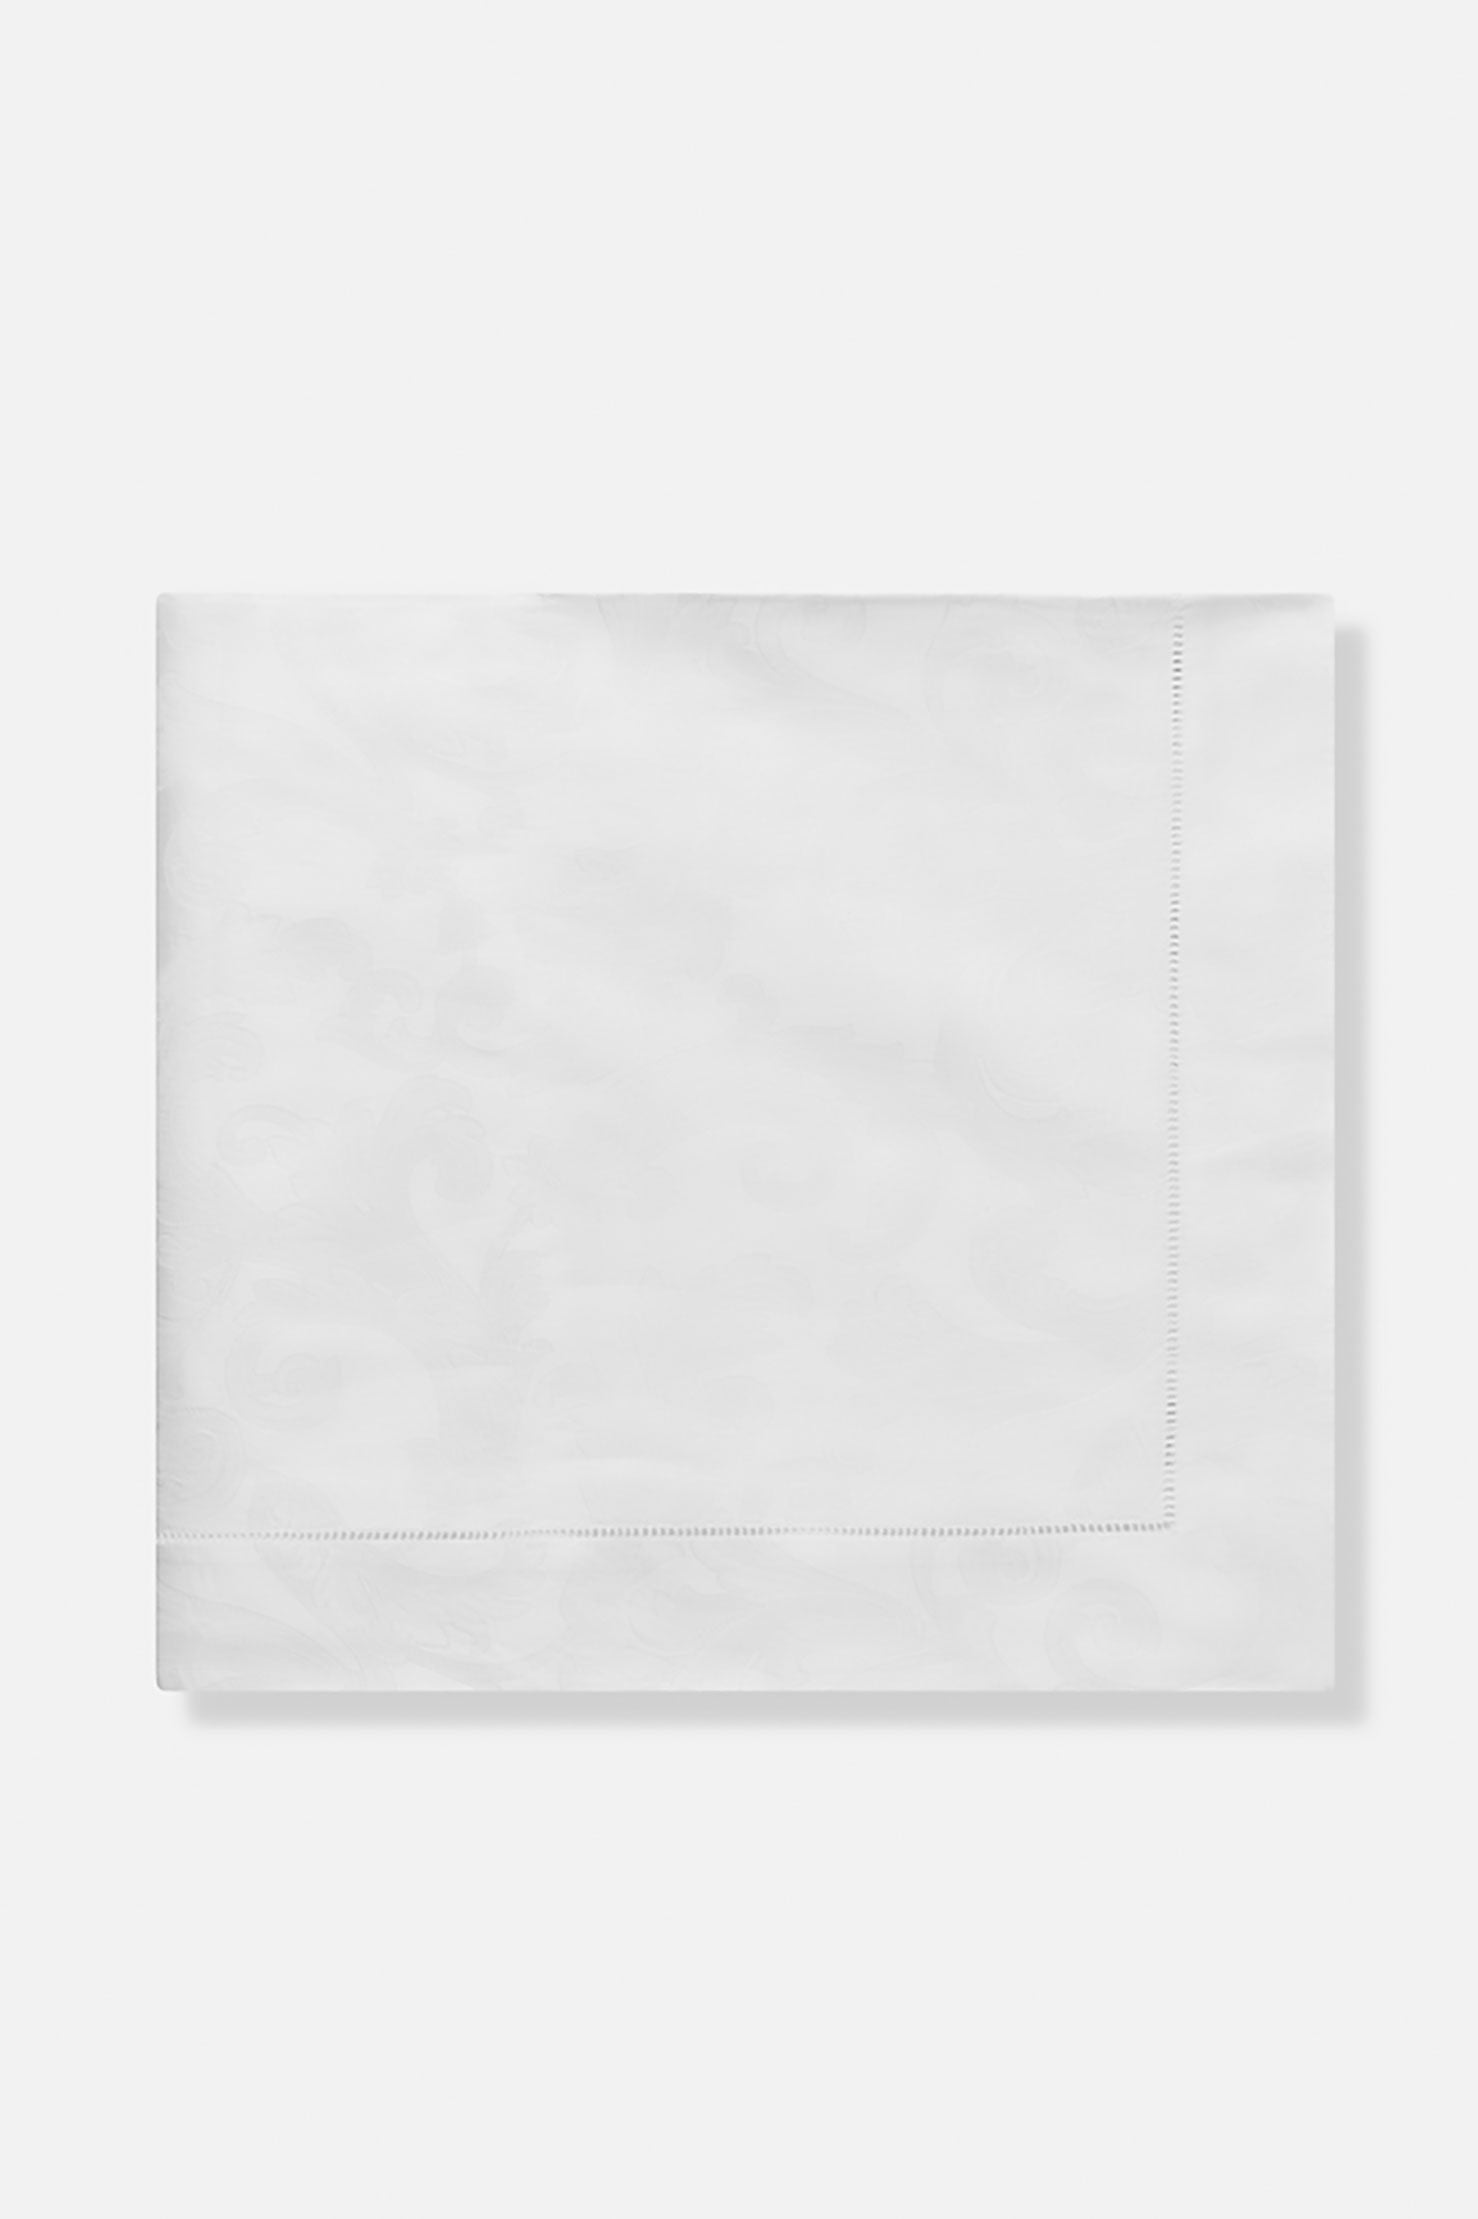 MILANO WHITE JACQUARD TABLE CLOTH 116" X 56" RECTANGLE